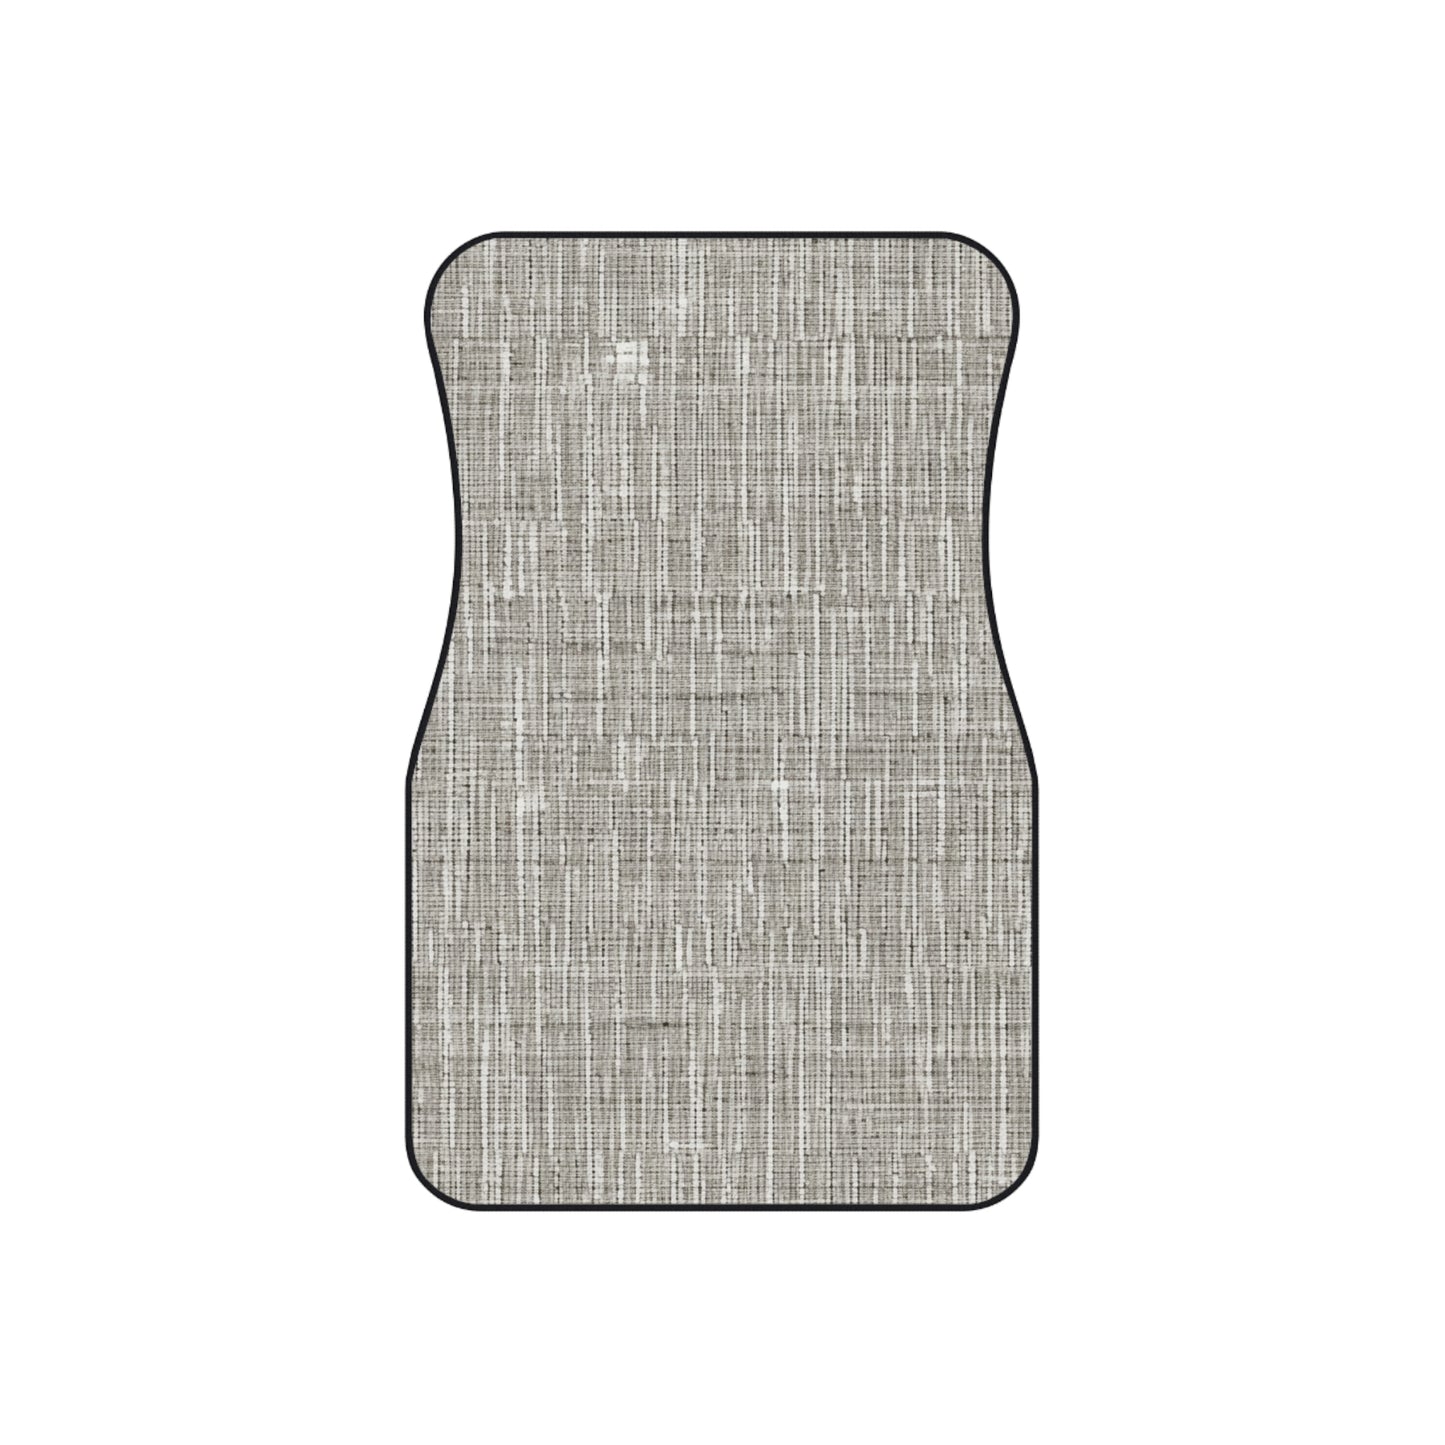 Silver Grey: Denim-Inspired, Contemporary Fabric Design - Car Mats (Set of 4)